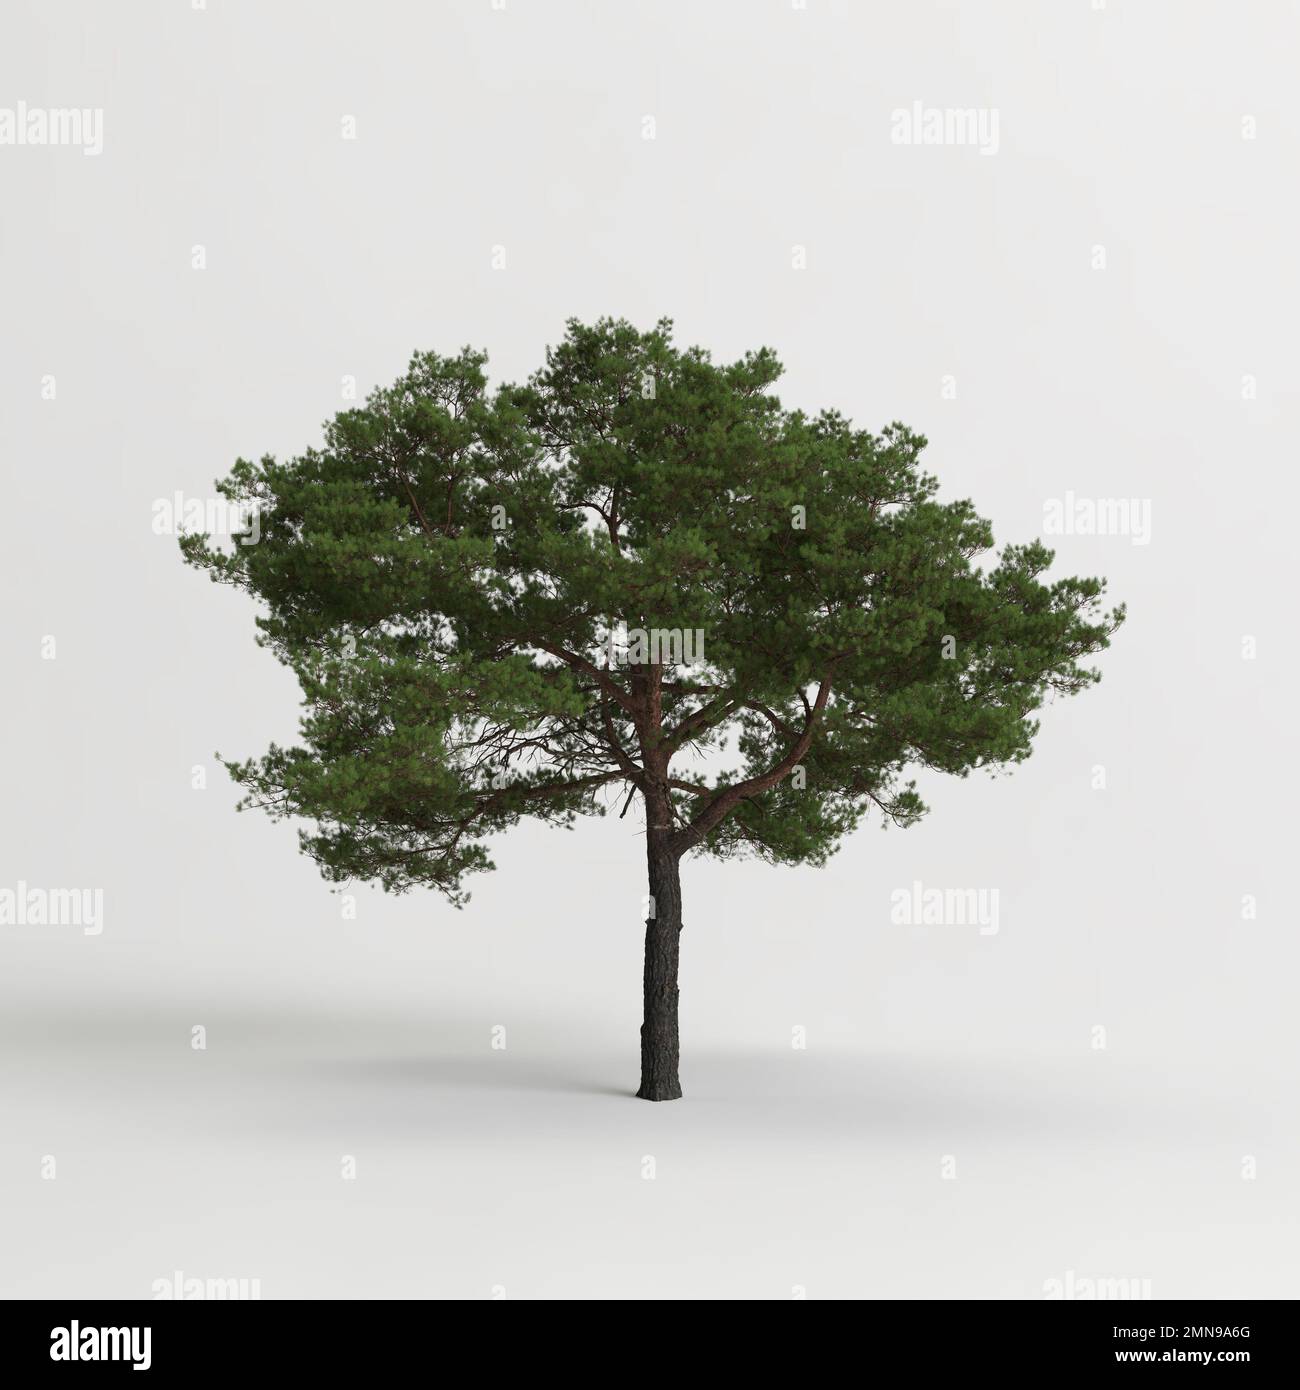 3d illustration of pinus pinea tree isolated on white background Stock Photo